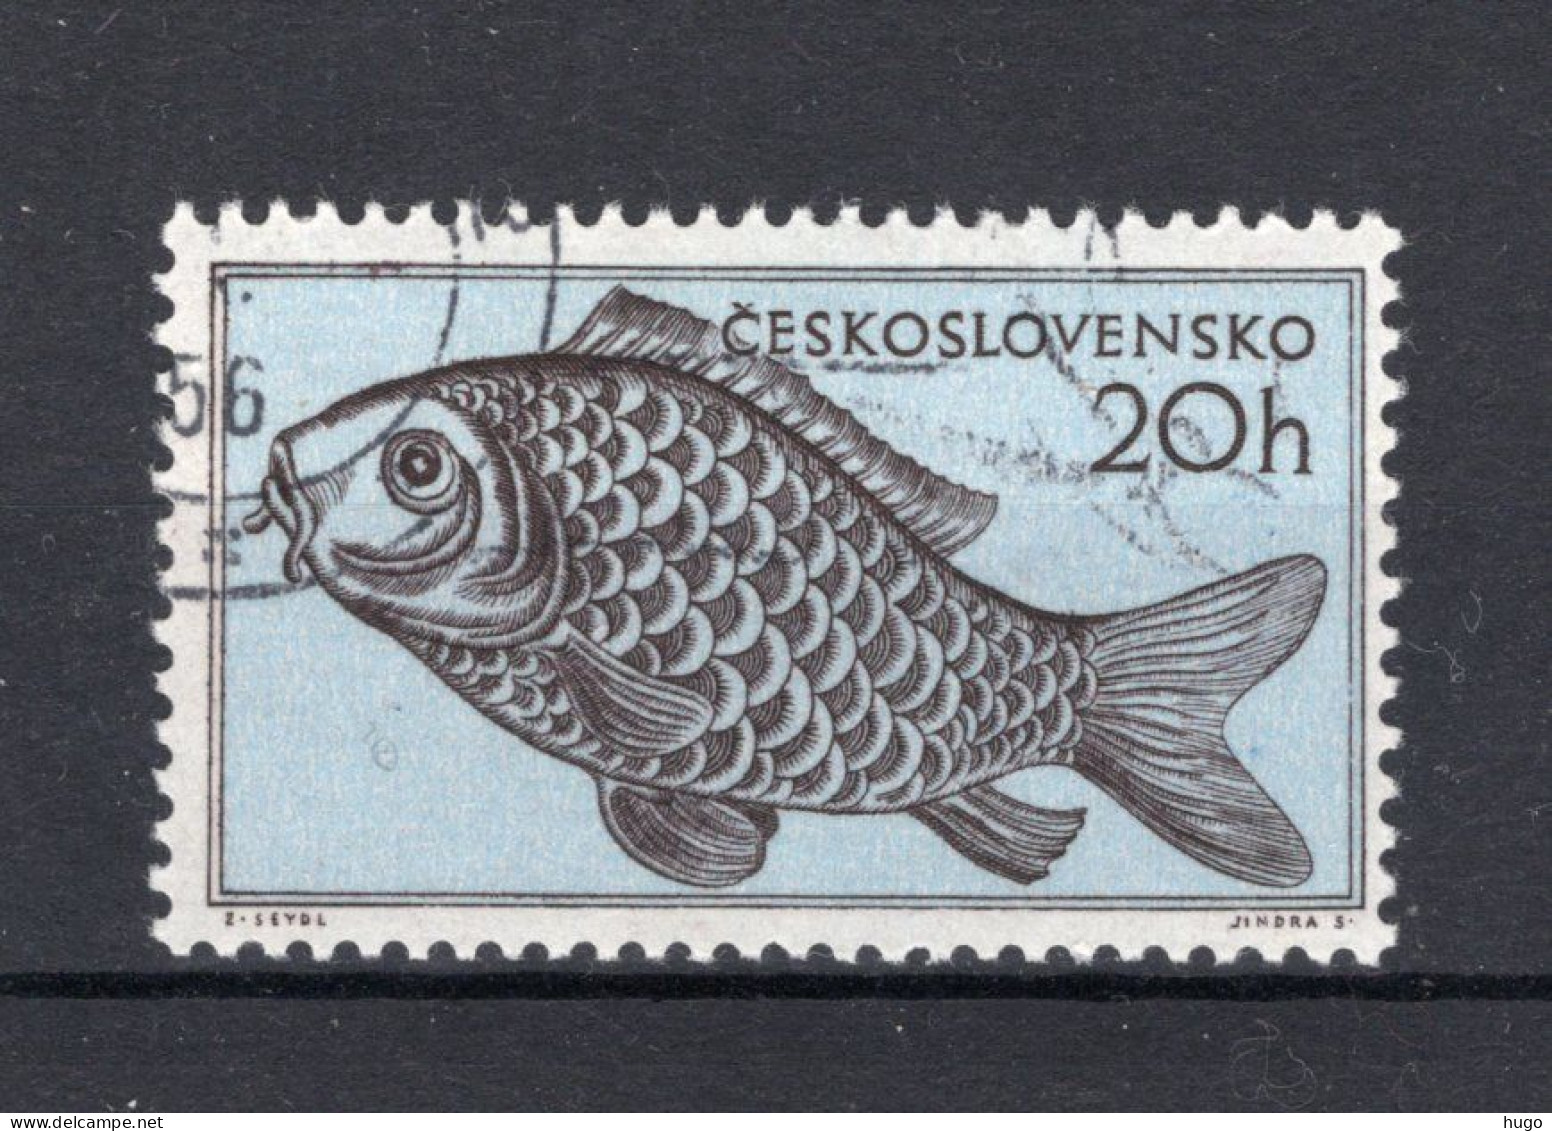 TSJECHOSLOVAKIJE Yt. 820° Gestempeld 1955 - Used Stamps